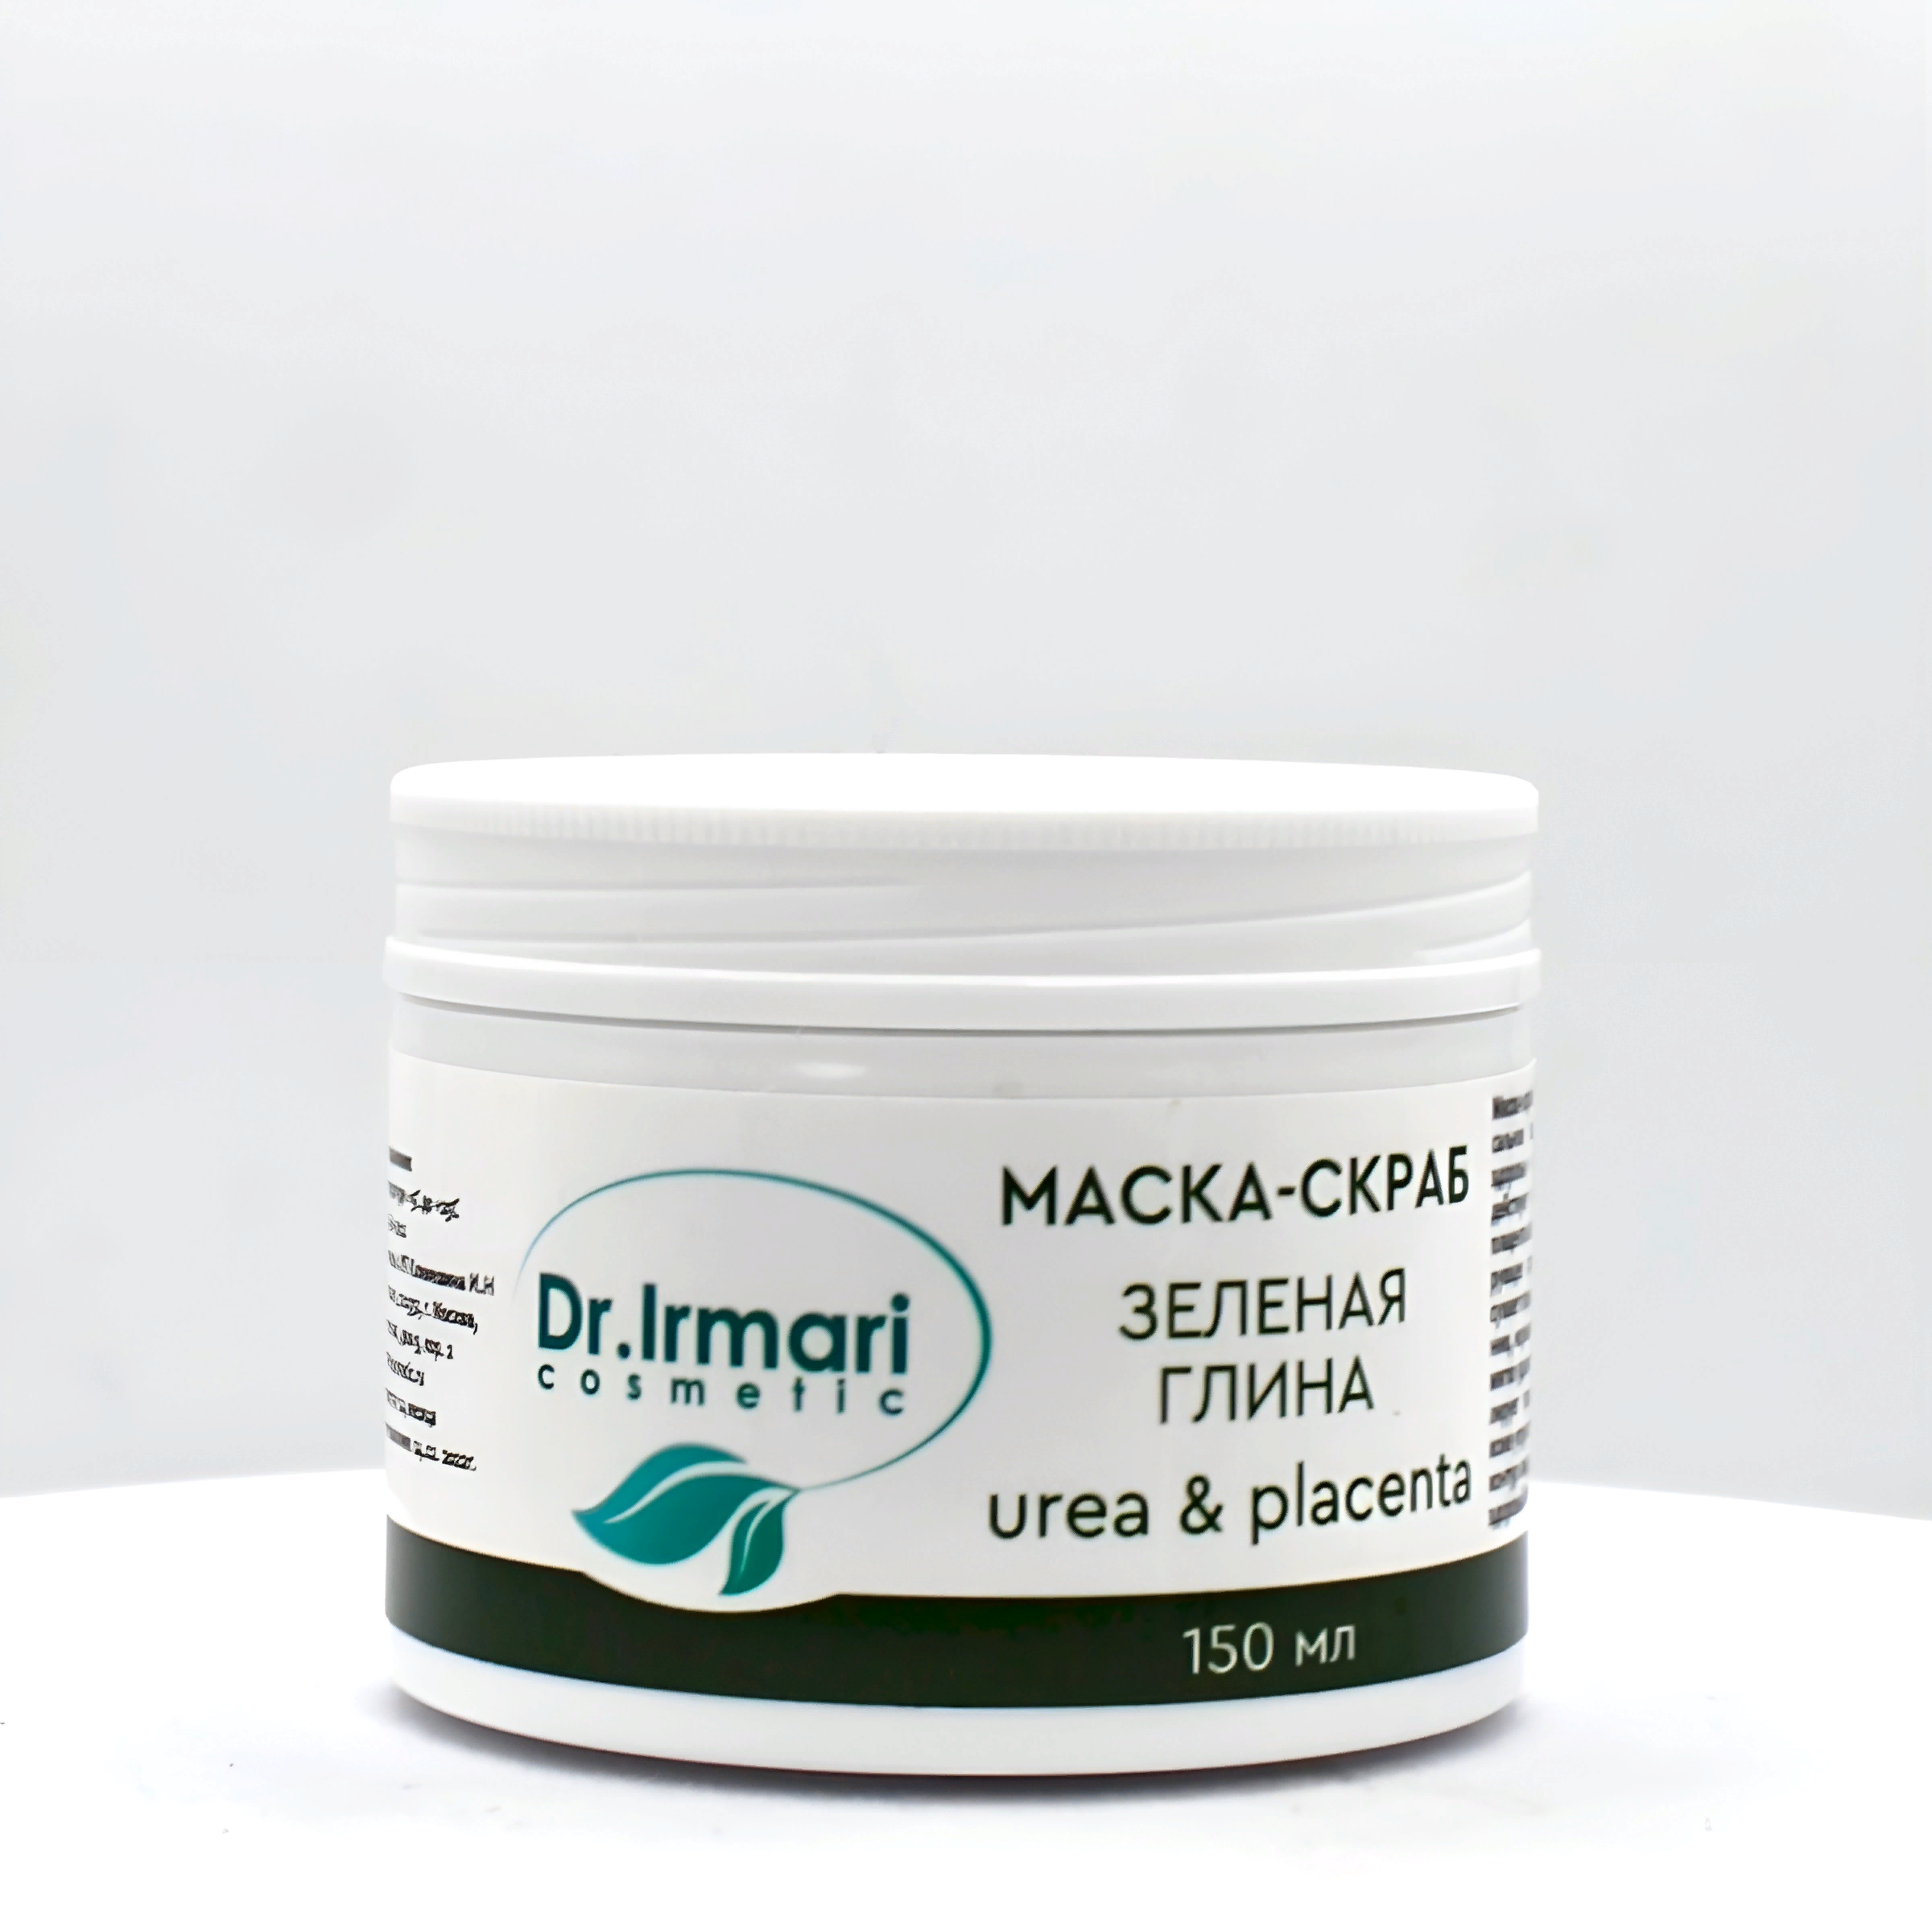 Маска-скраб Dr.Irmari cosmetic Urea & Placenta Зелёная глина 150 мл маска для лица dr irmari cosmetic urea